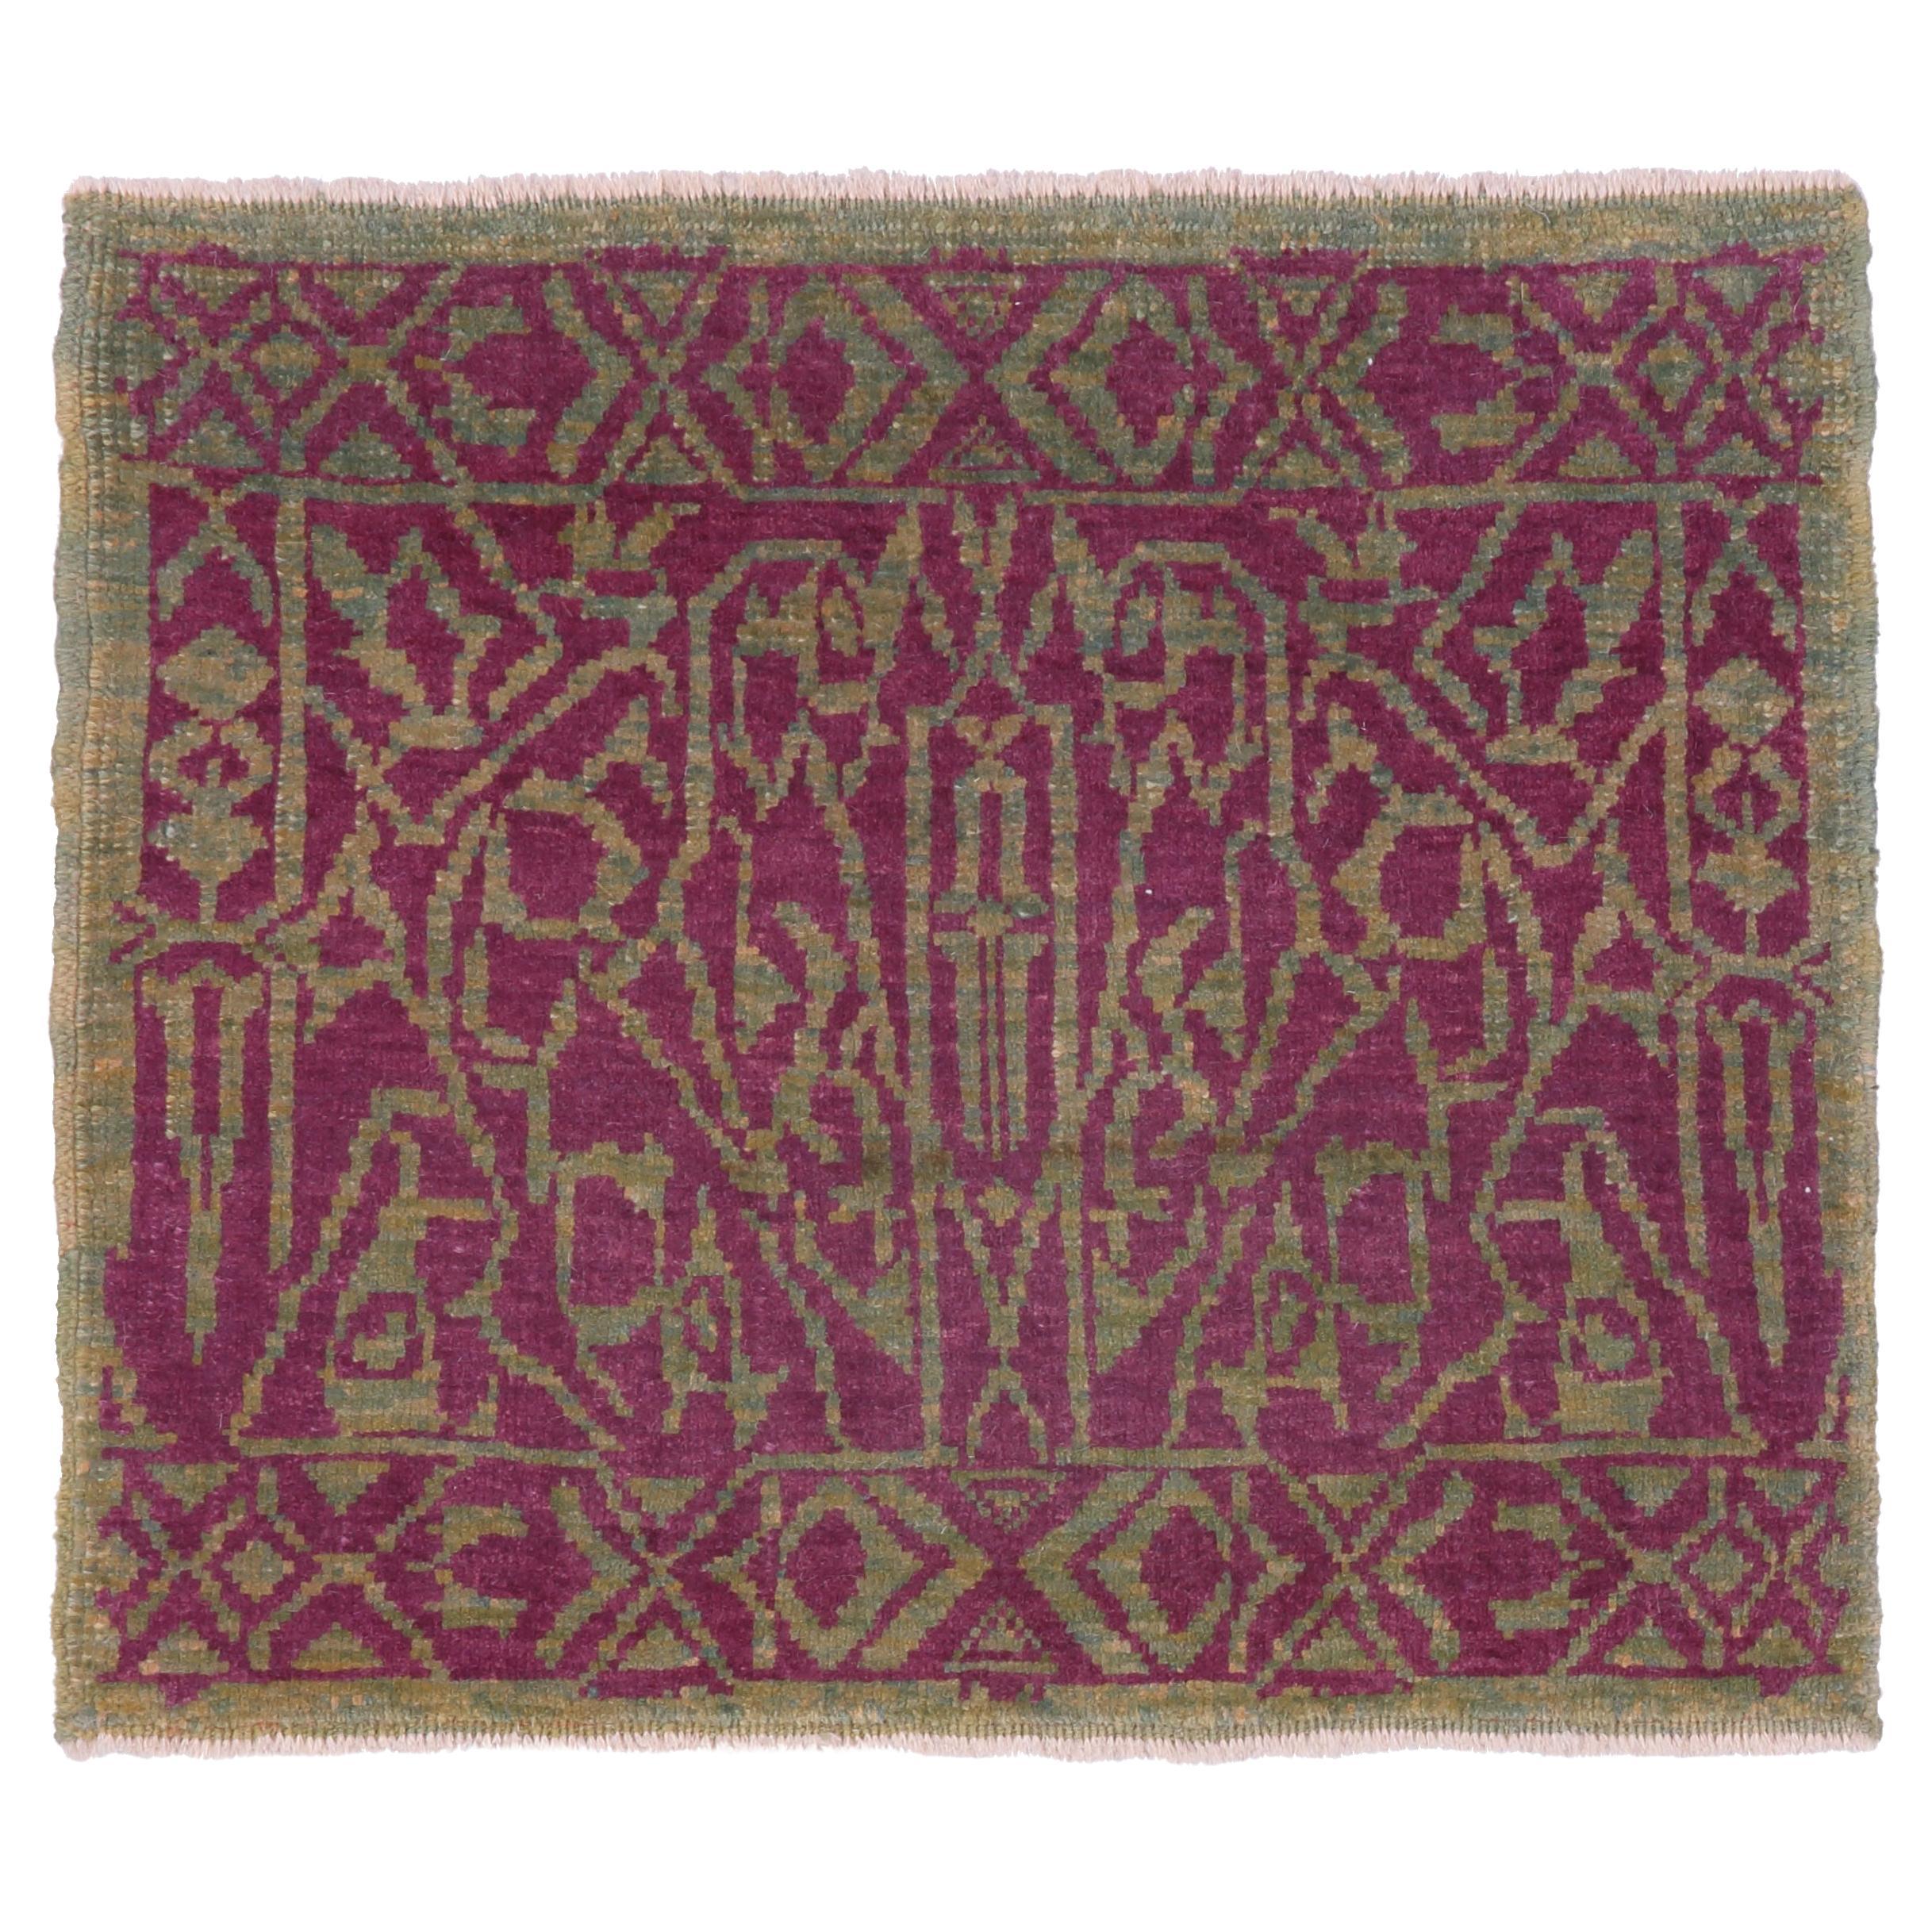 Ararat Rugs Mamluk Wagireh Rug with Geometric Design Revival Carpet Natural Dyed For Sale